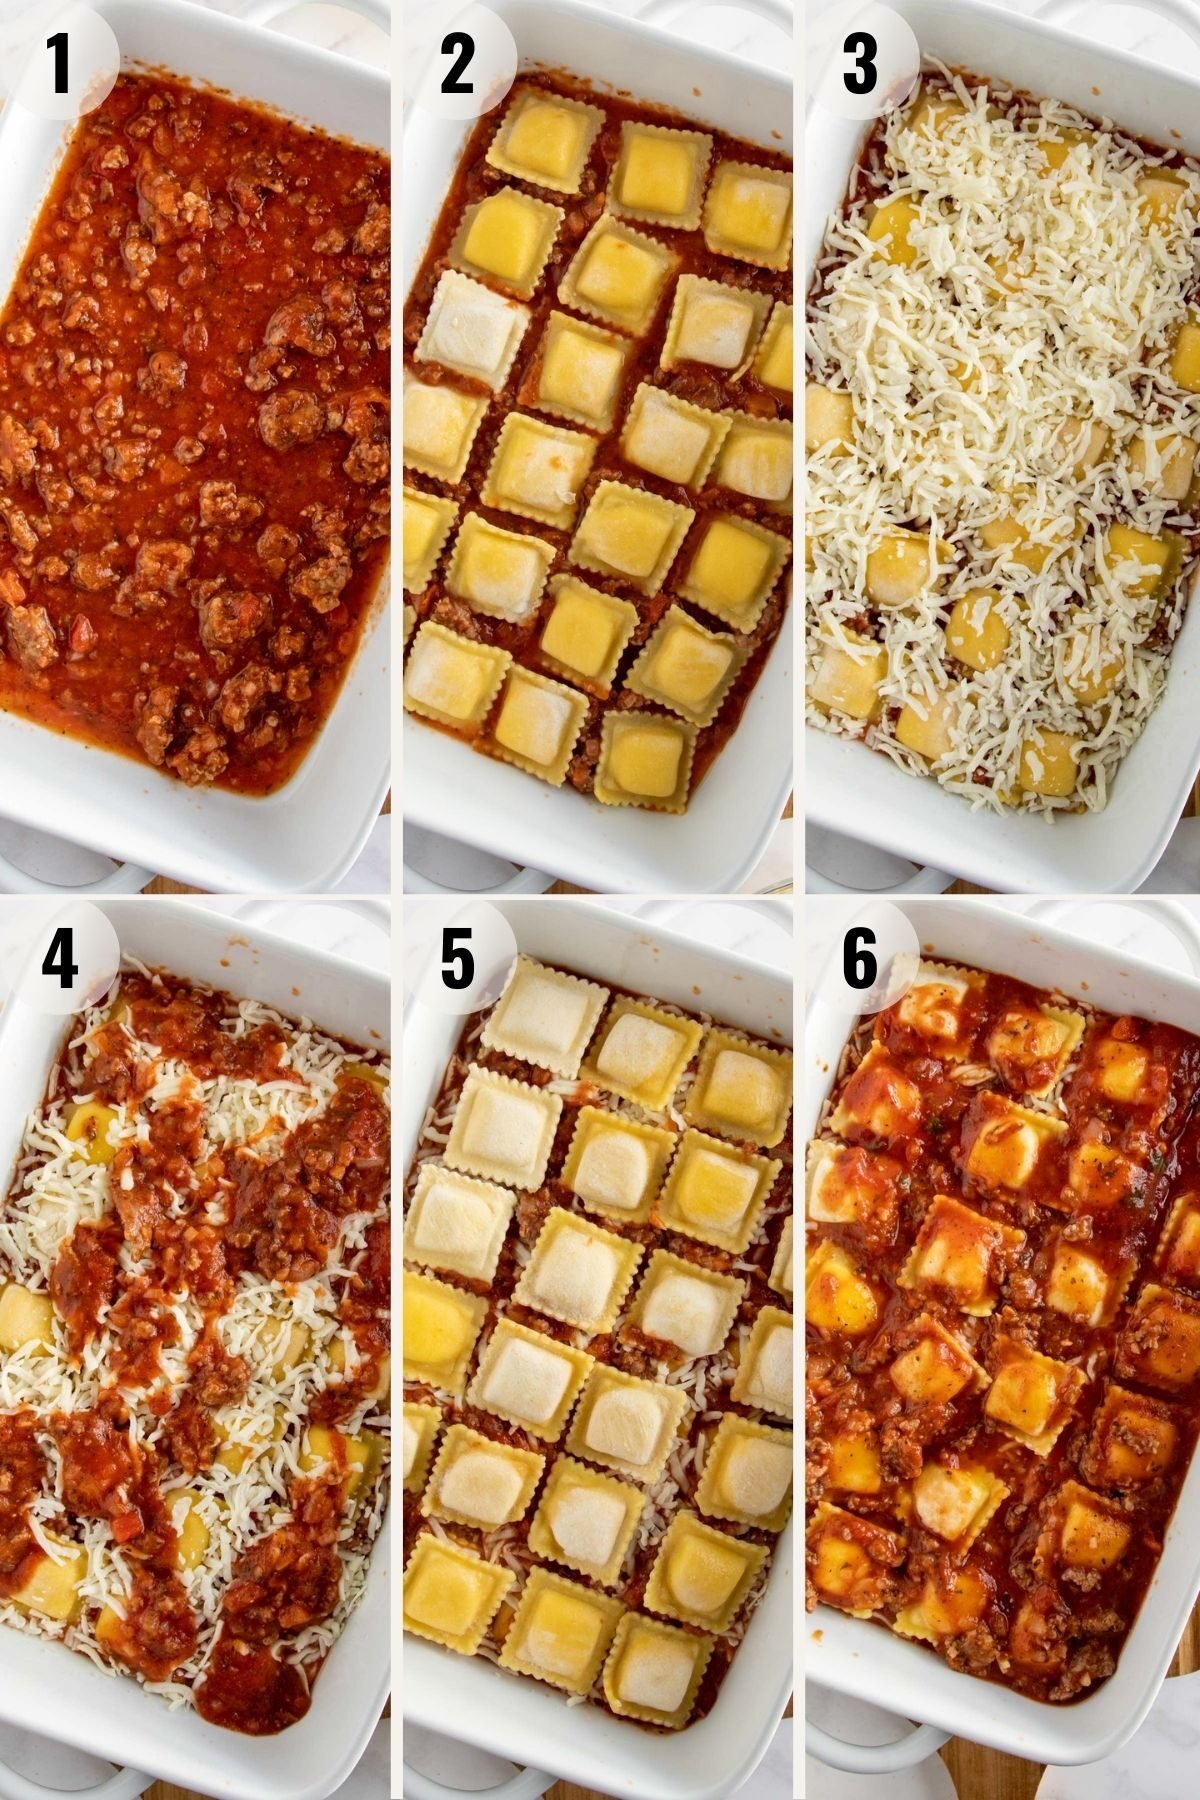 step by step assembling a ravioli lasagna